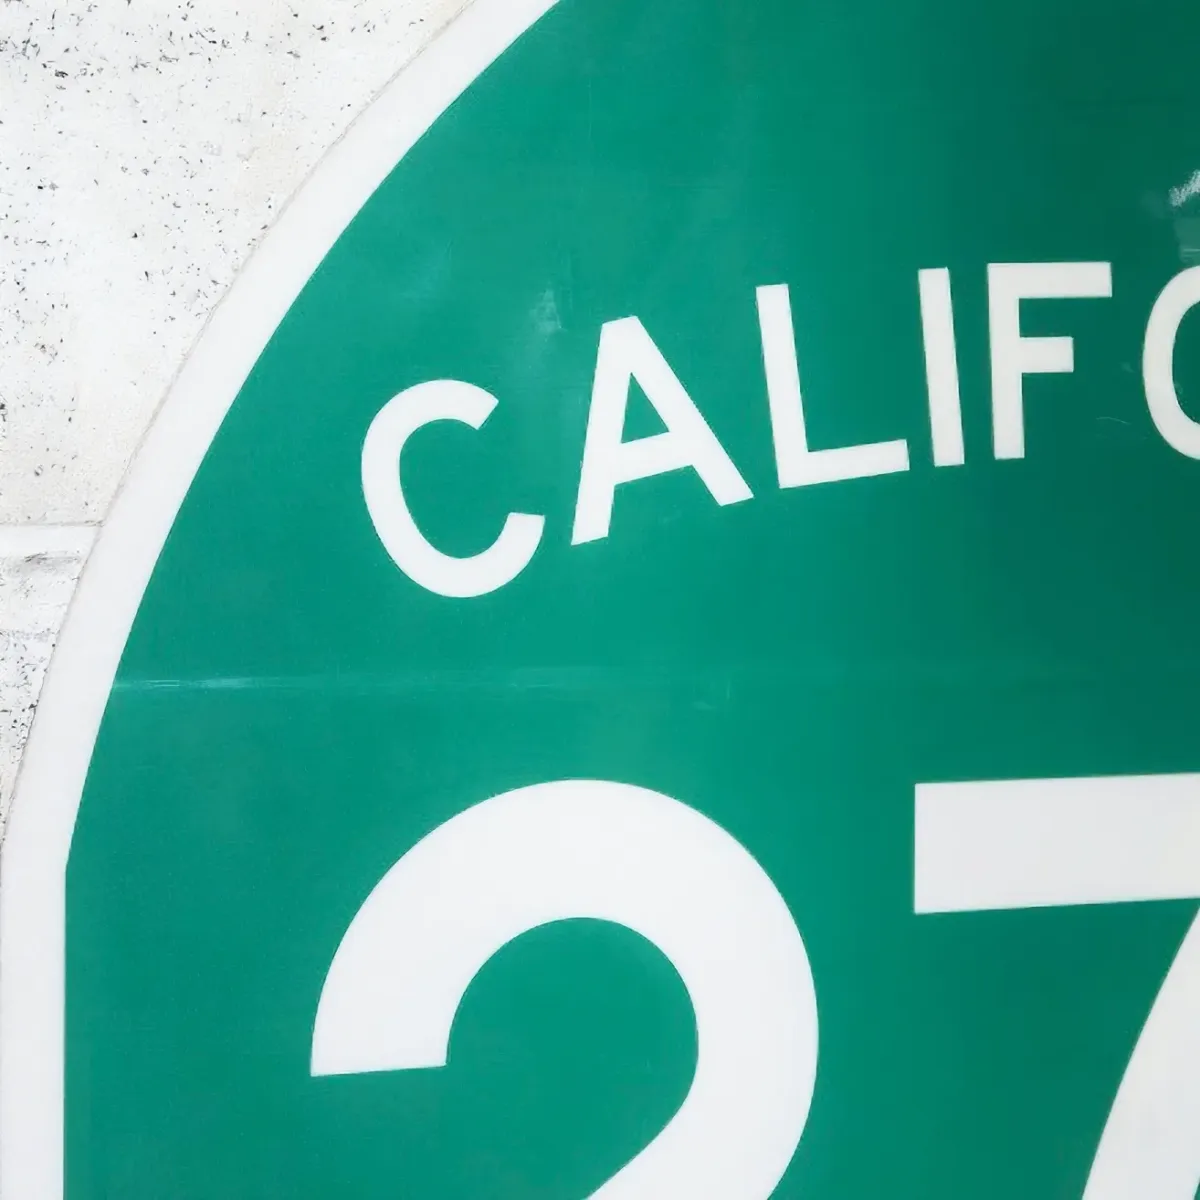 CALIFORNIA 273 ロードサイン